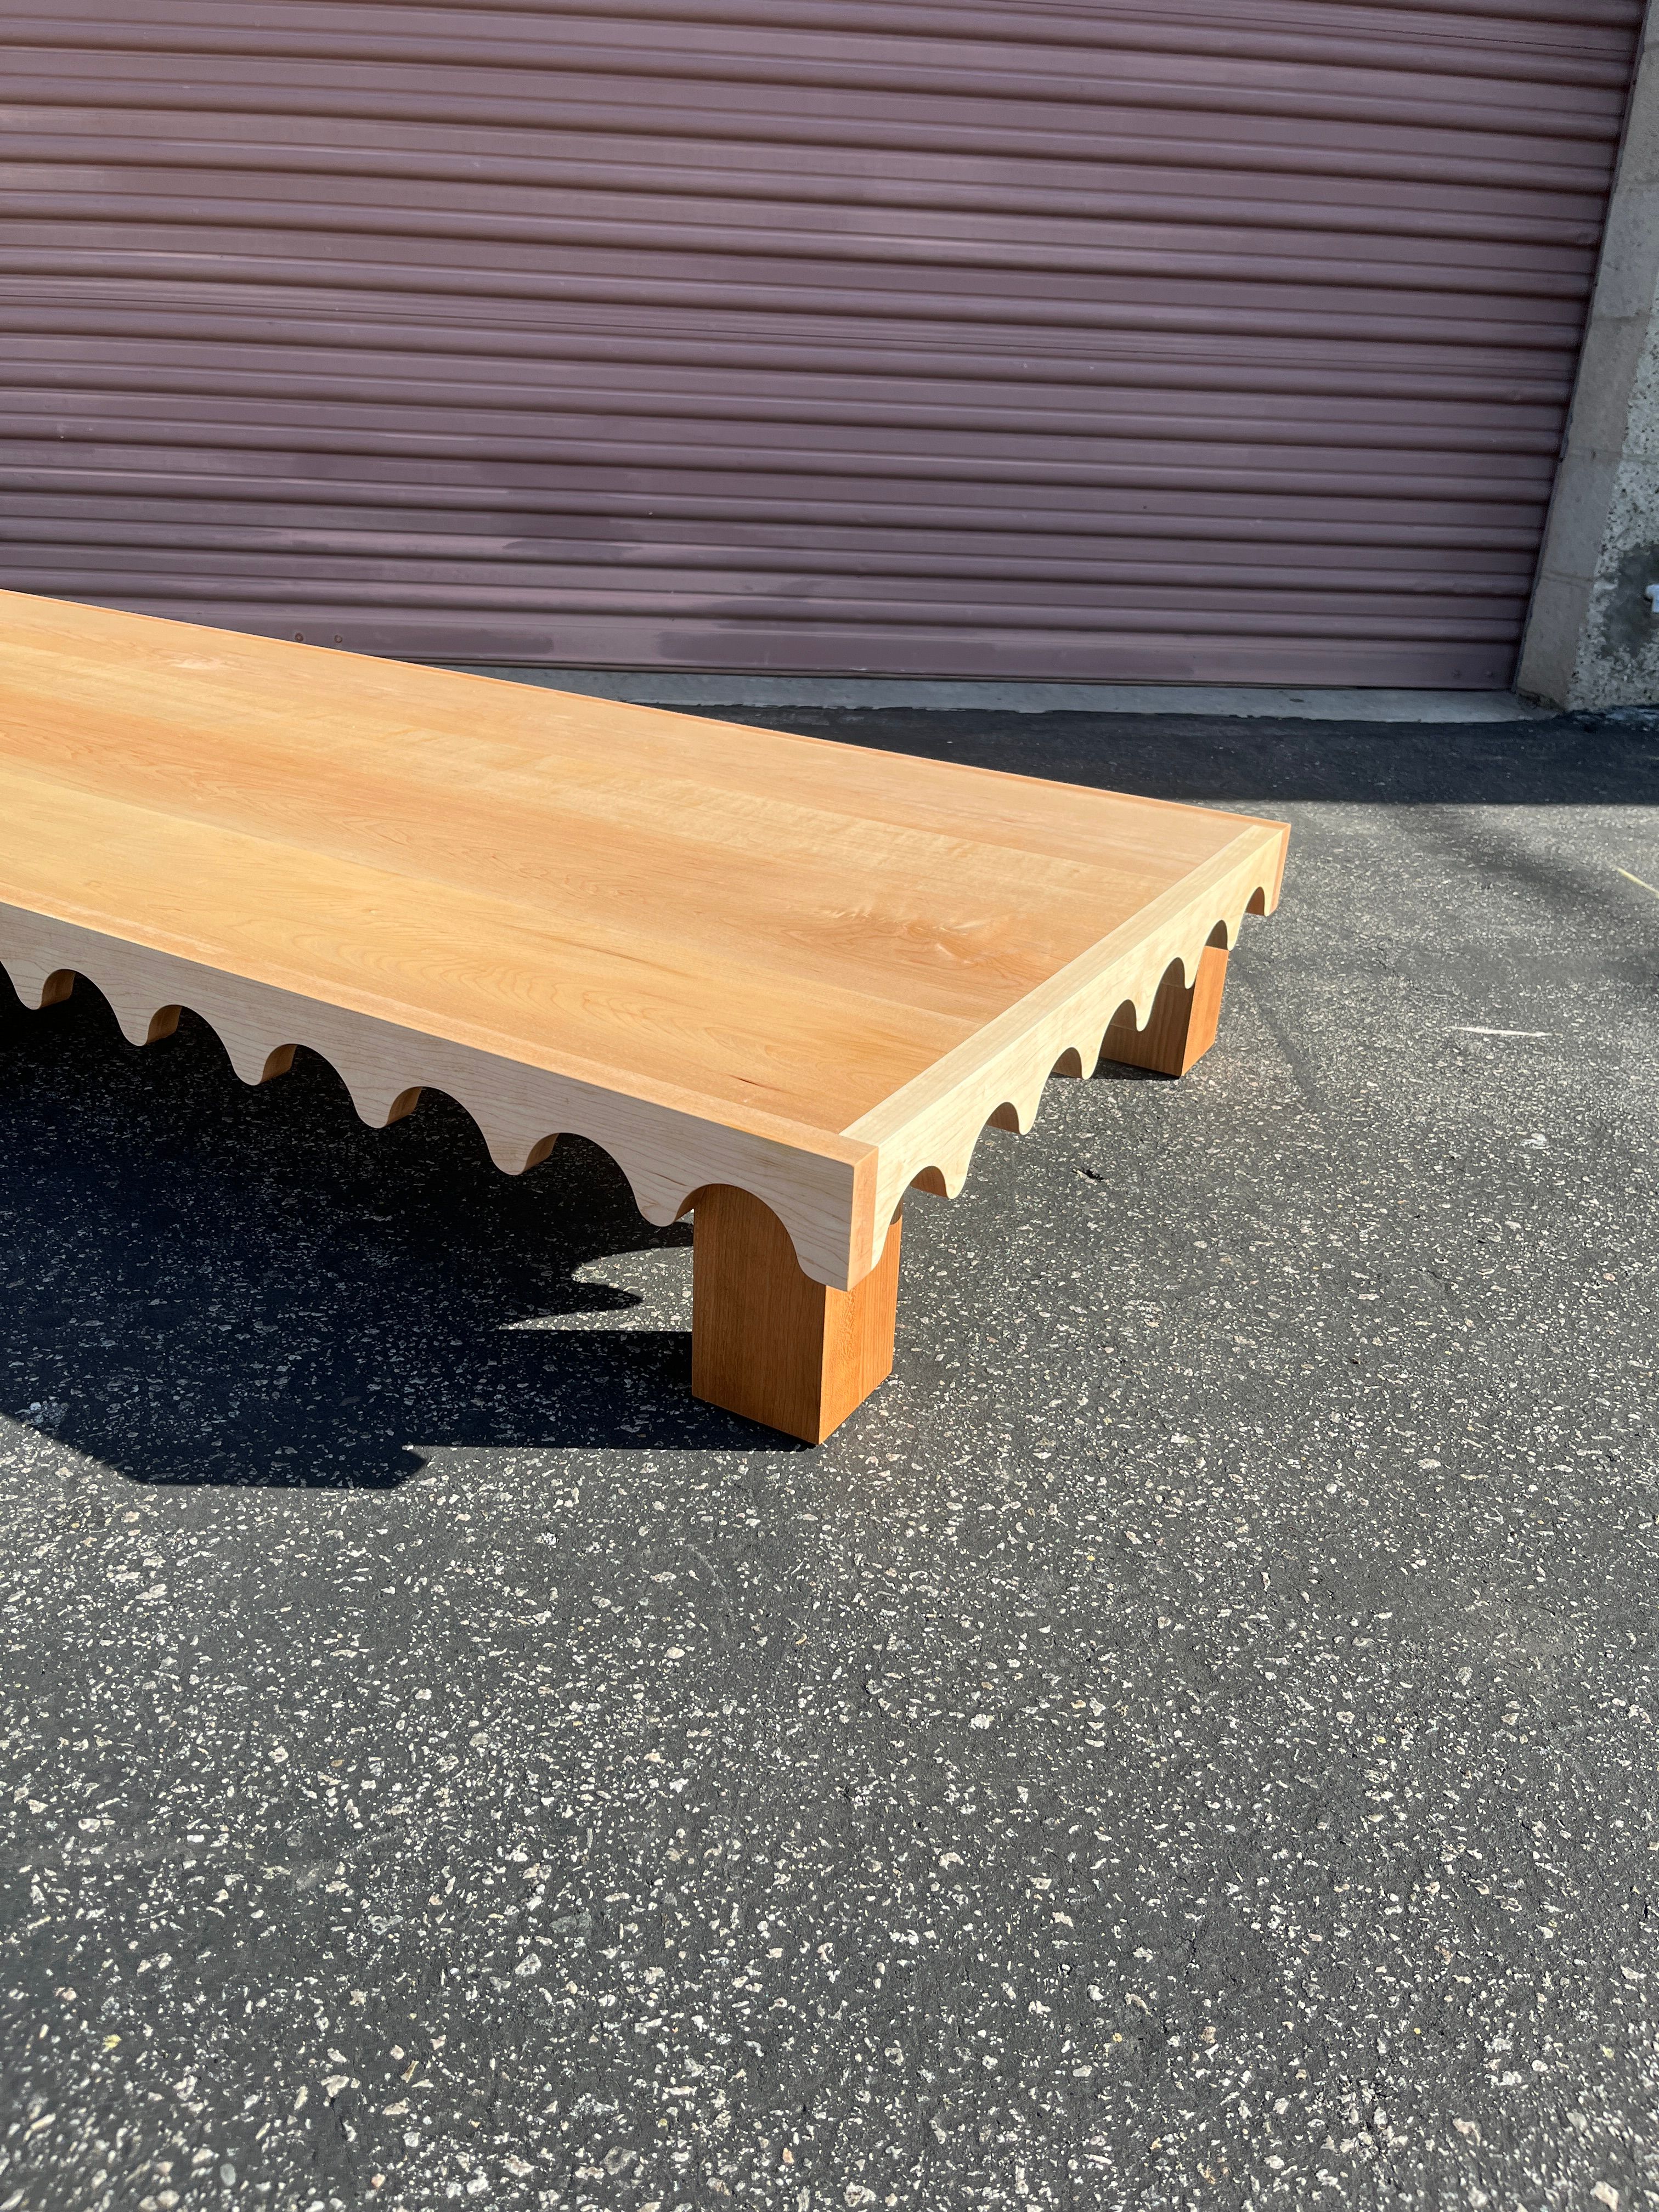  Scallop Benches - Laun Studio product image 7